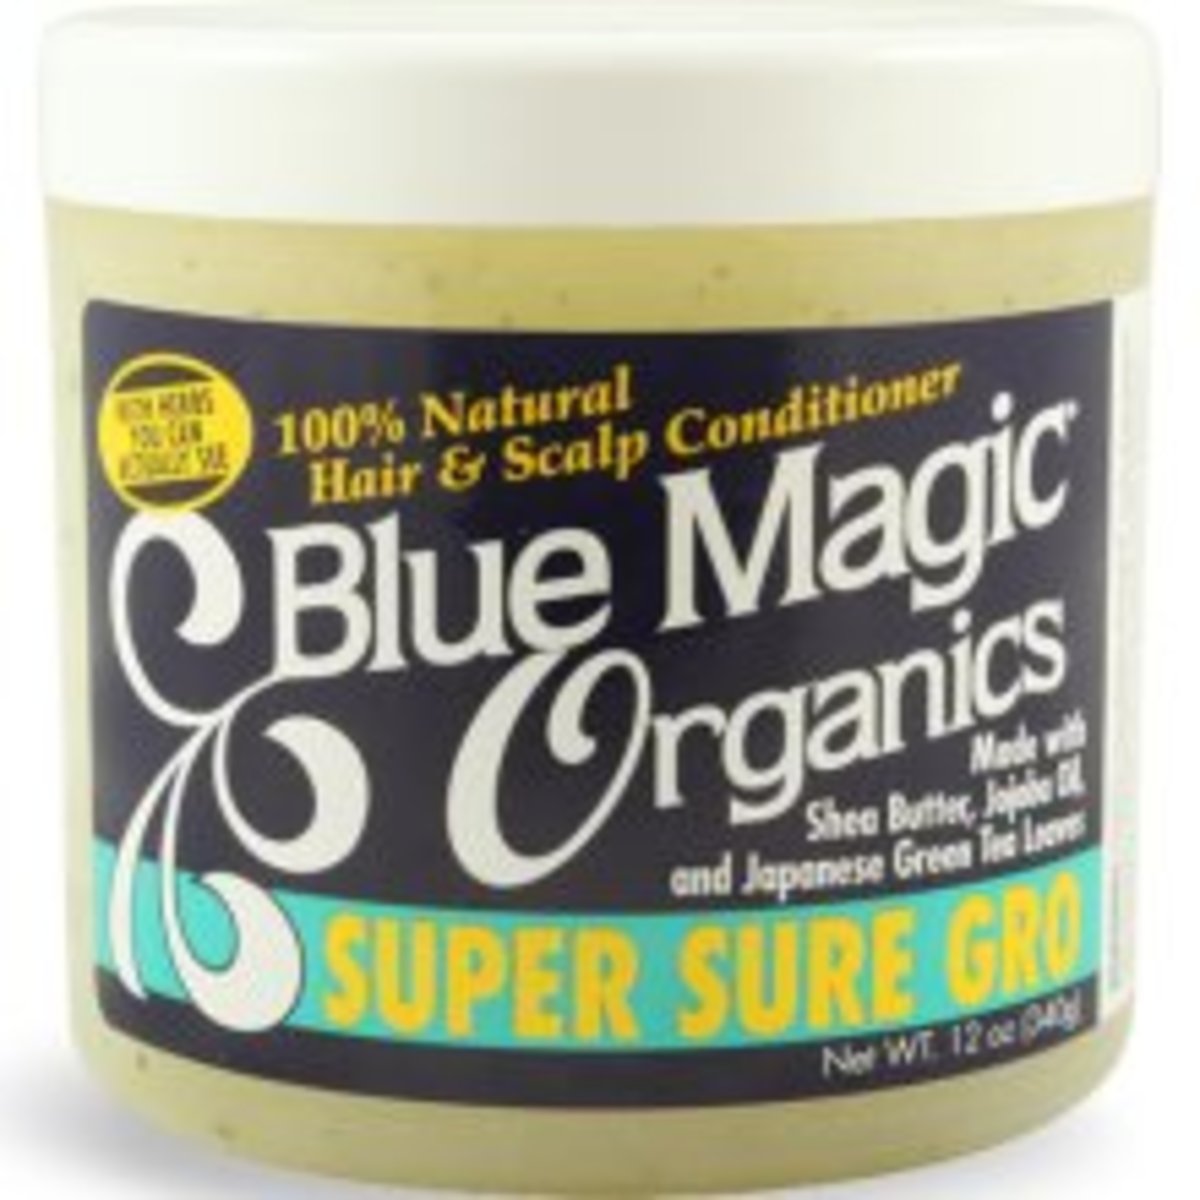 Blue Magic and Black Natural Hair